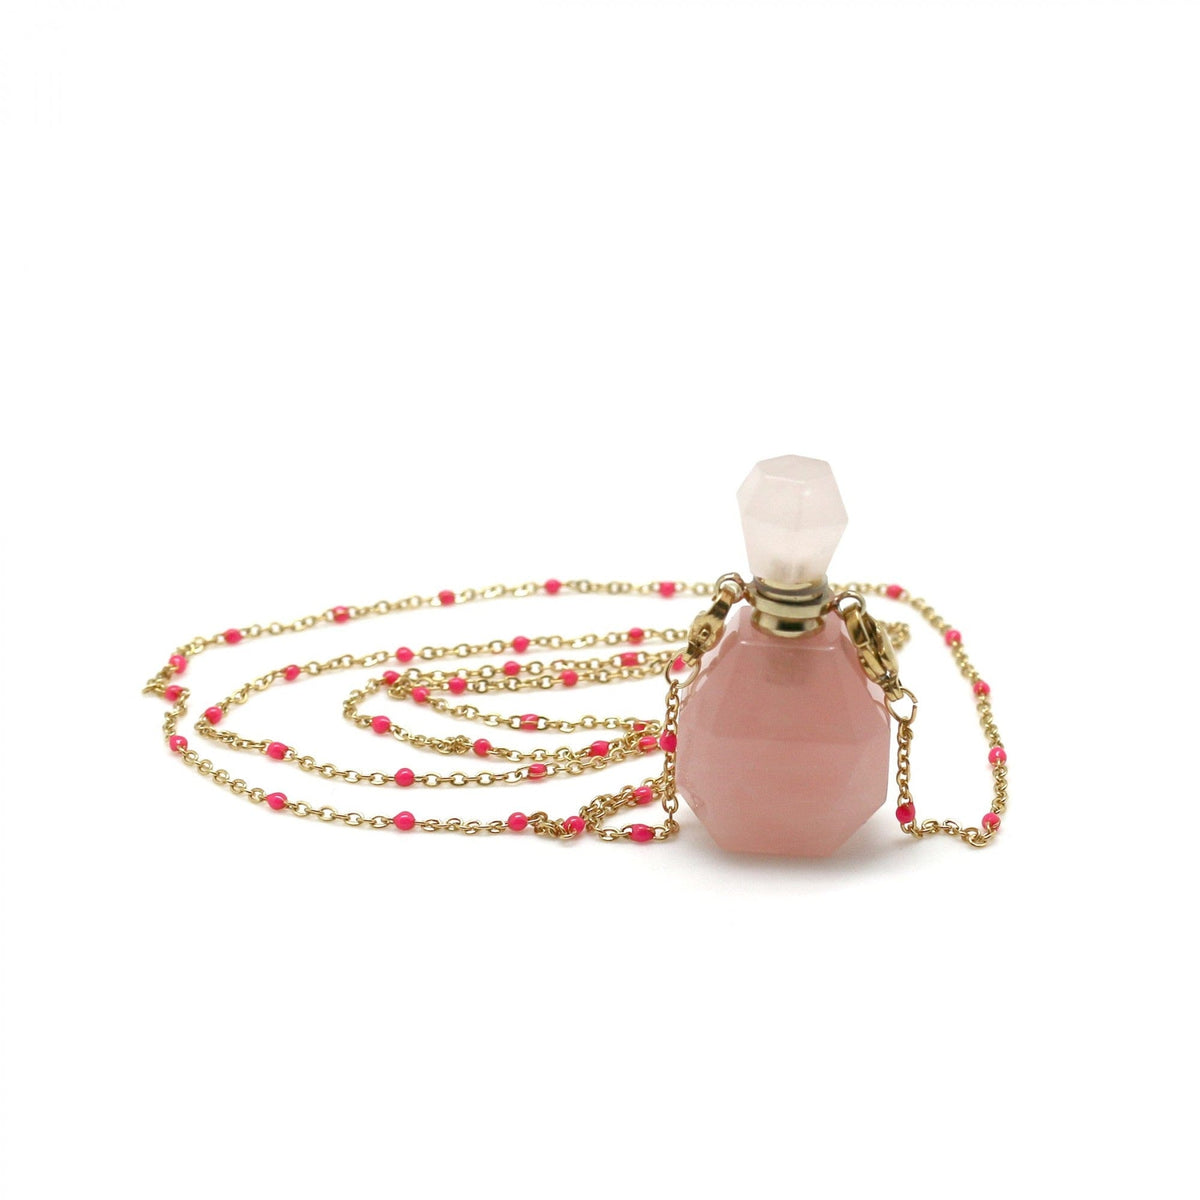 Collier flacon parfum diffuseur huiles essentielles quartz rose - Natalie